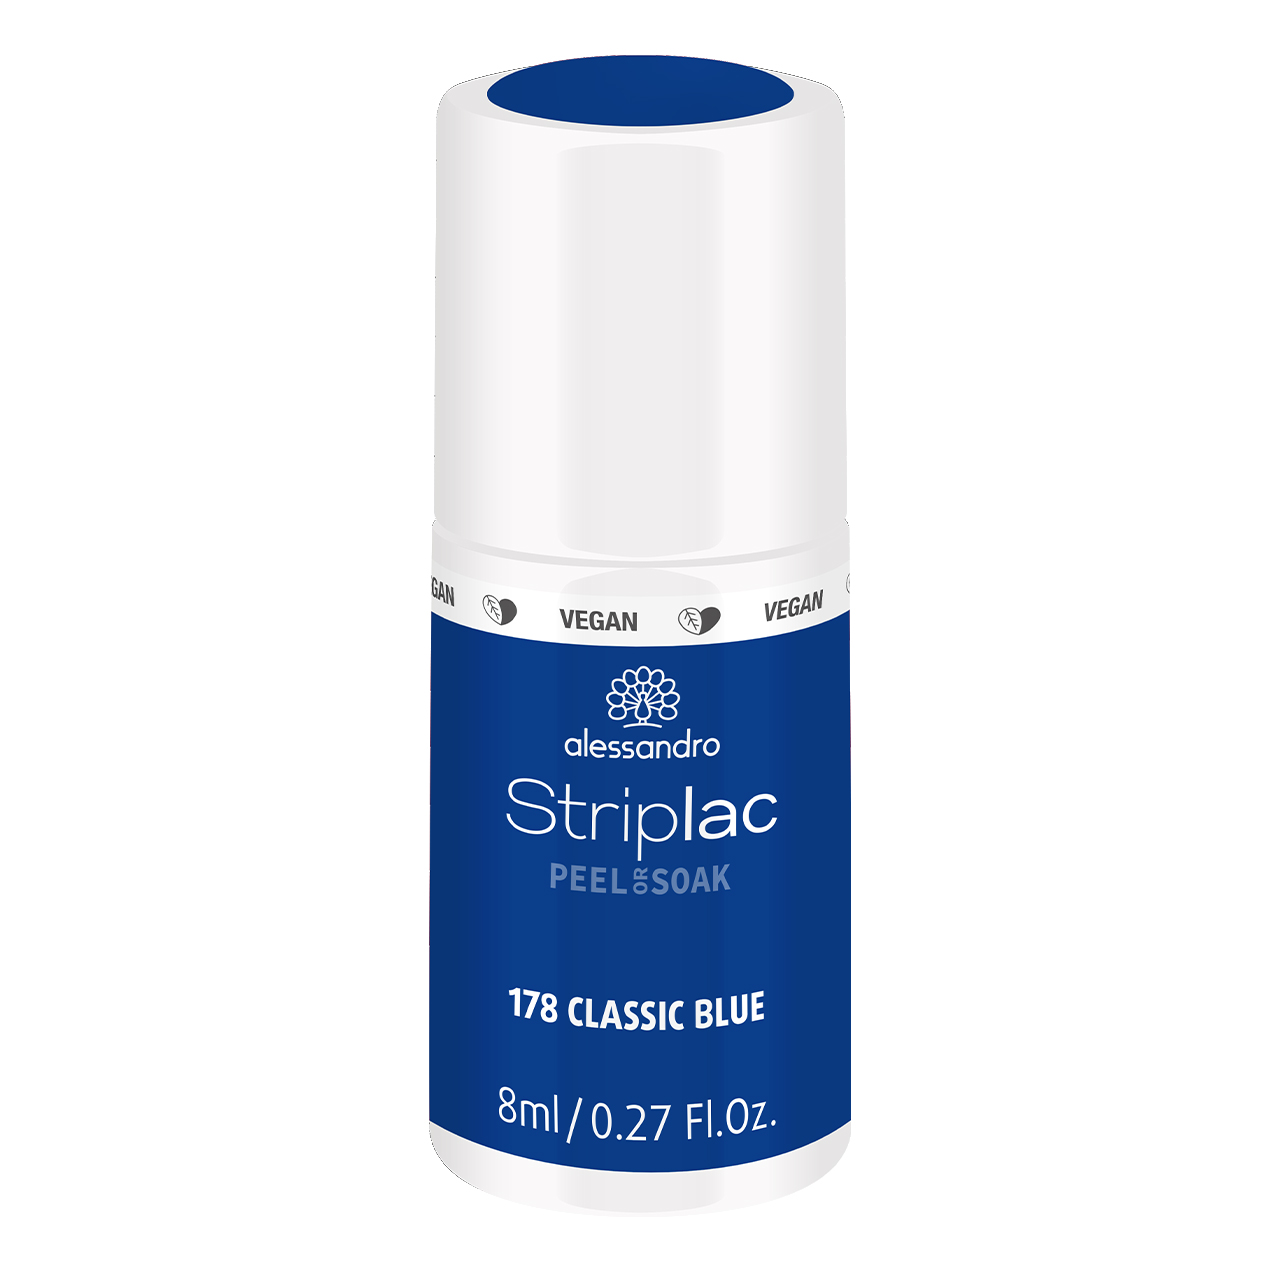 Striplac Peel or Soak Classic Blue